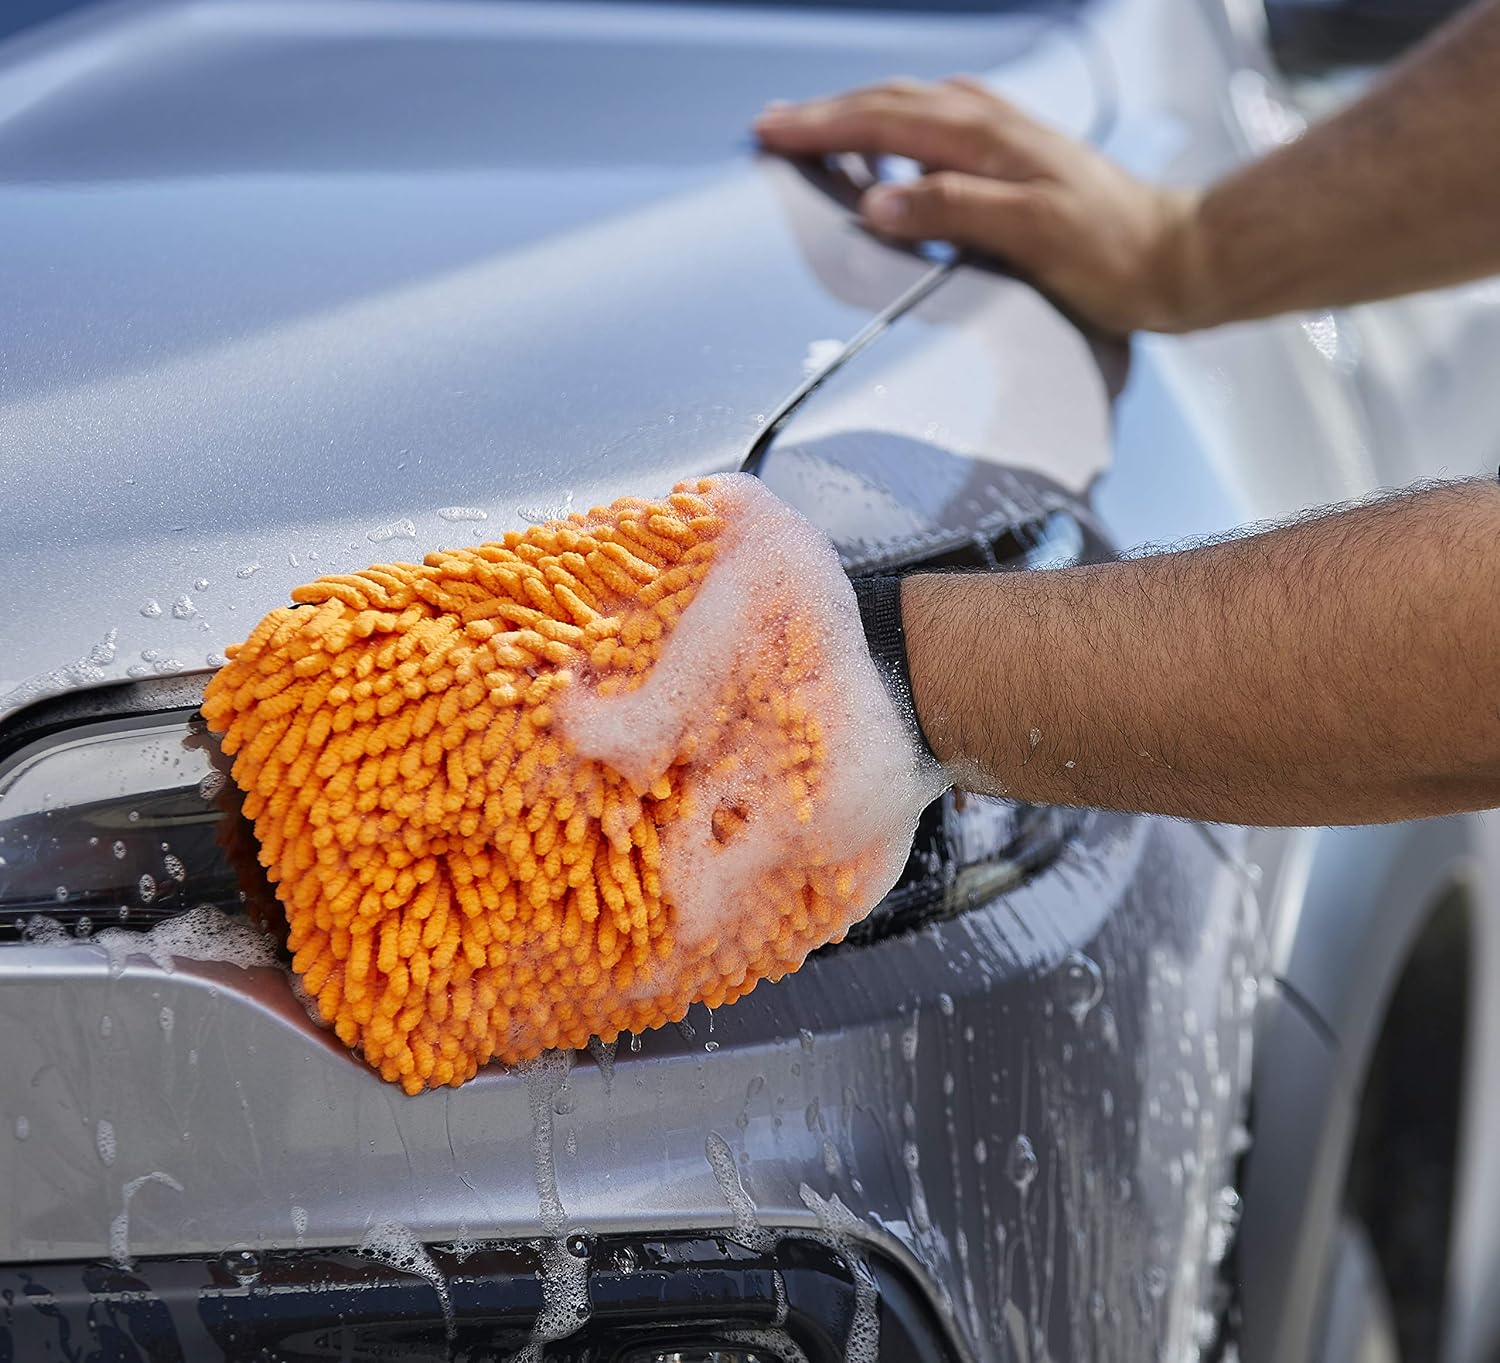 Armor All Microfiber Car Wash Mitt , Noodle Tech Car Wash Glove